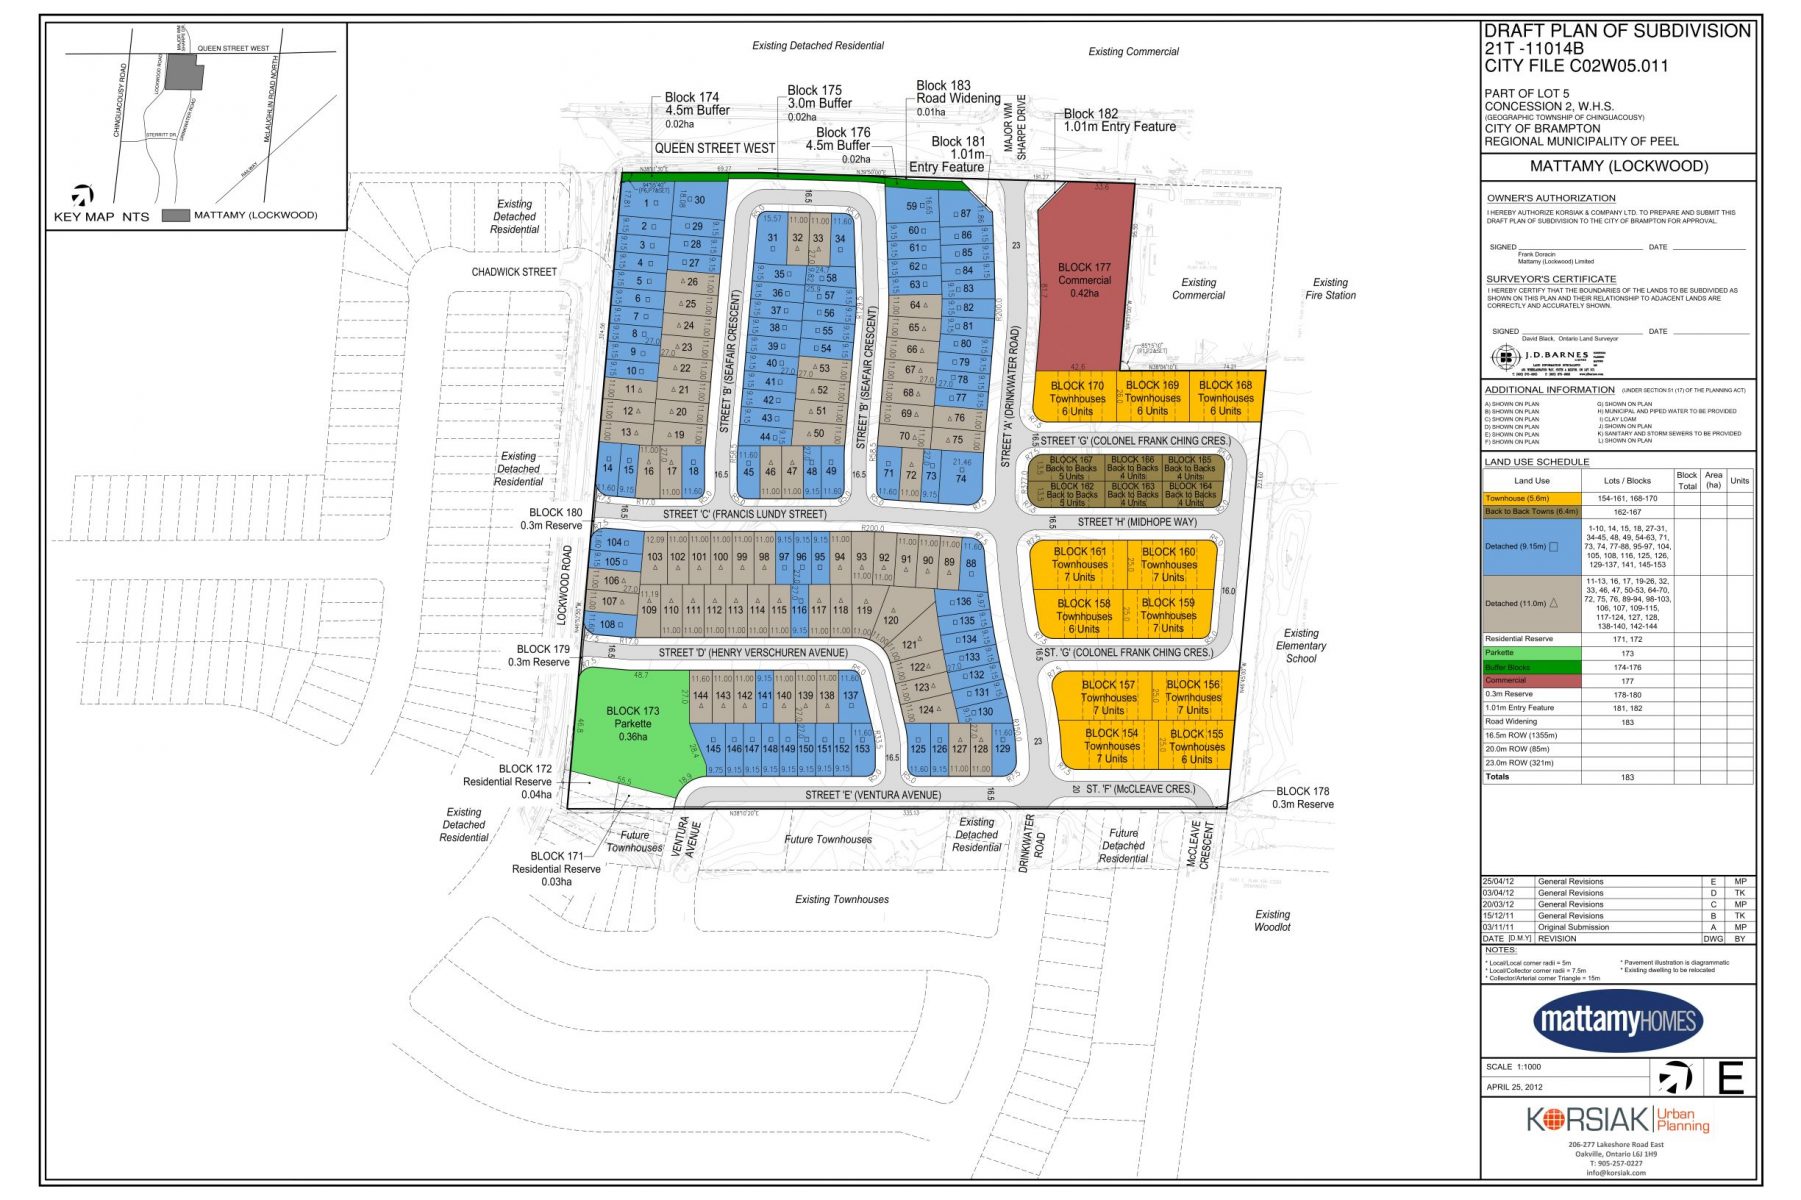 Korsiak Urban Planning - Brampton Portfolio - Queen Street West, Greenfield, Mixed Use Development - Brampton, Ontario